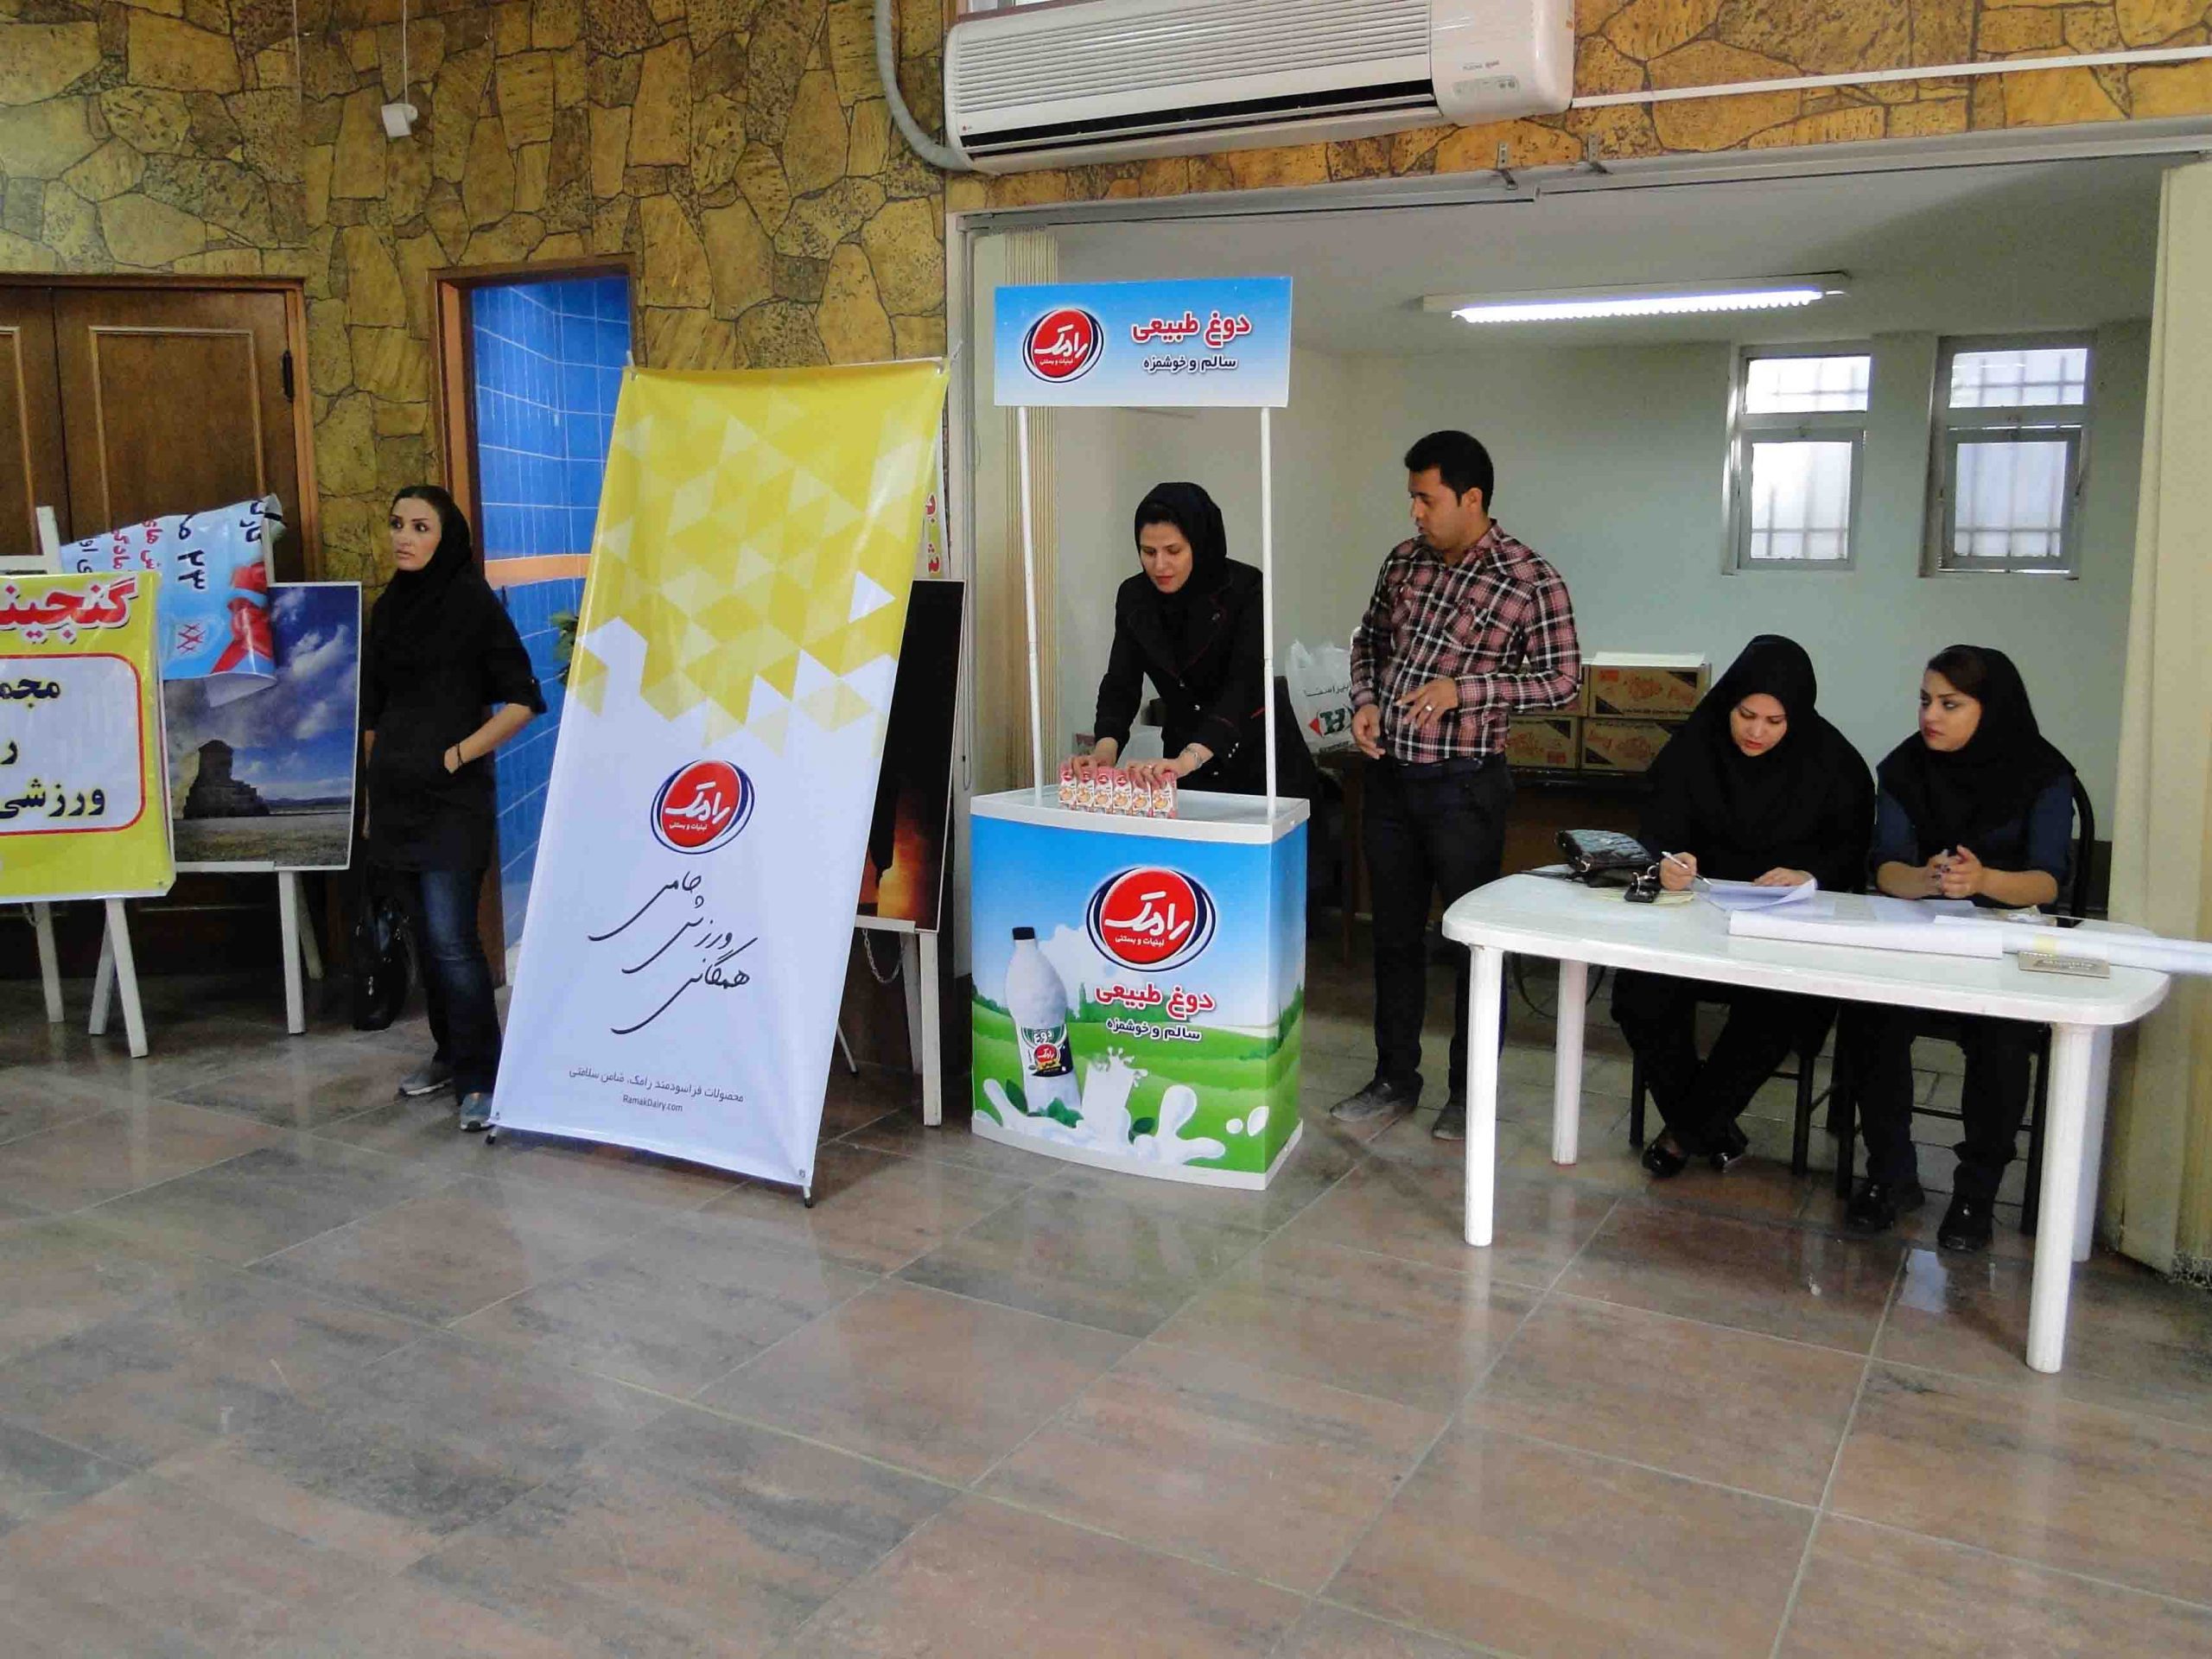 dsc01825 1 scaled اخبار برگزاری همایش مربیان آمادگی جسمانی استان فارس با حمایت شرکت رامک